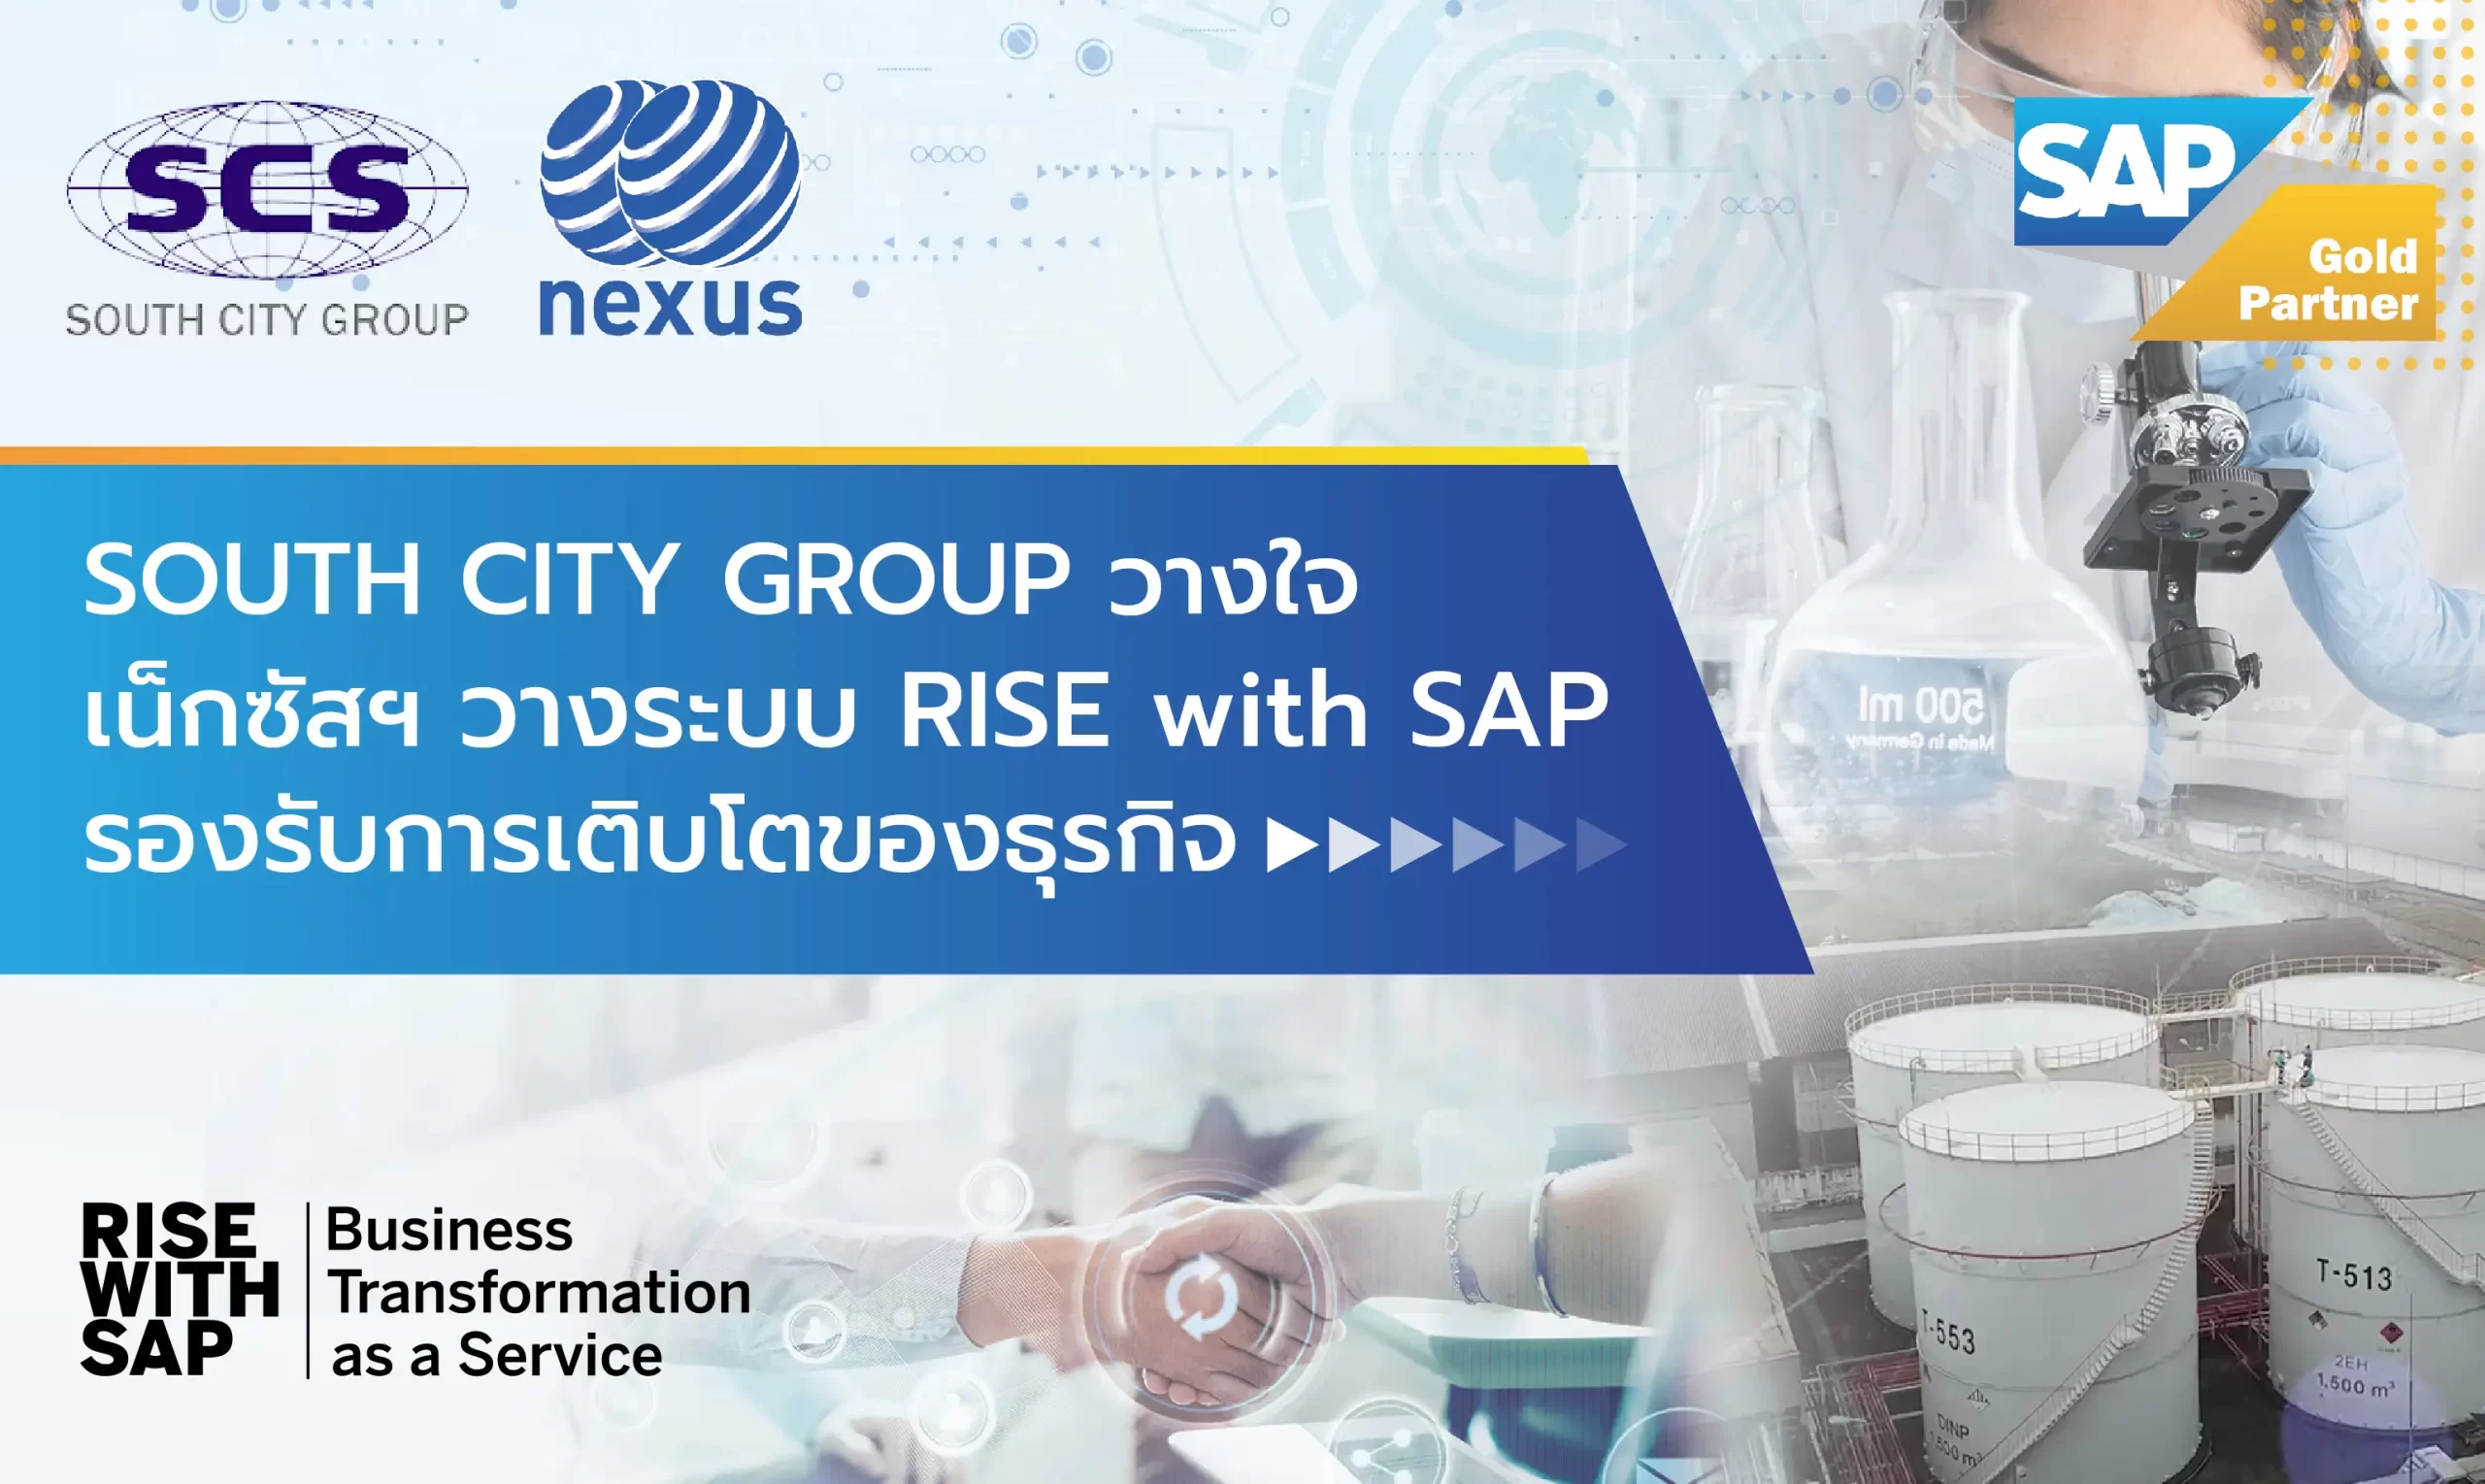 SOUTH CITY GROUP วางใจ เน็กซัสฯ วางระบบ RISE with SAP รองรับการเติบโตของธุรกิจ